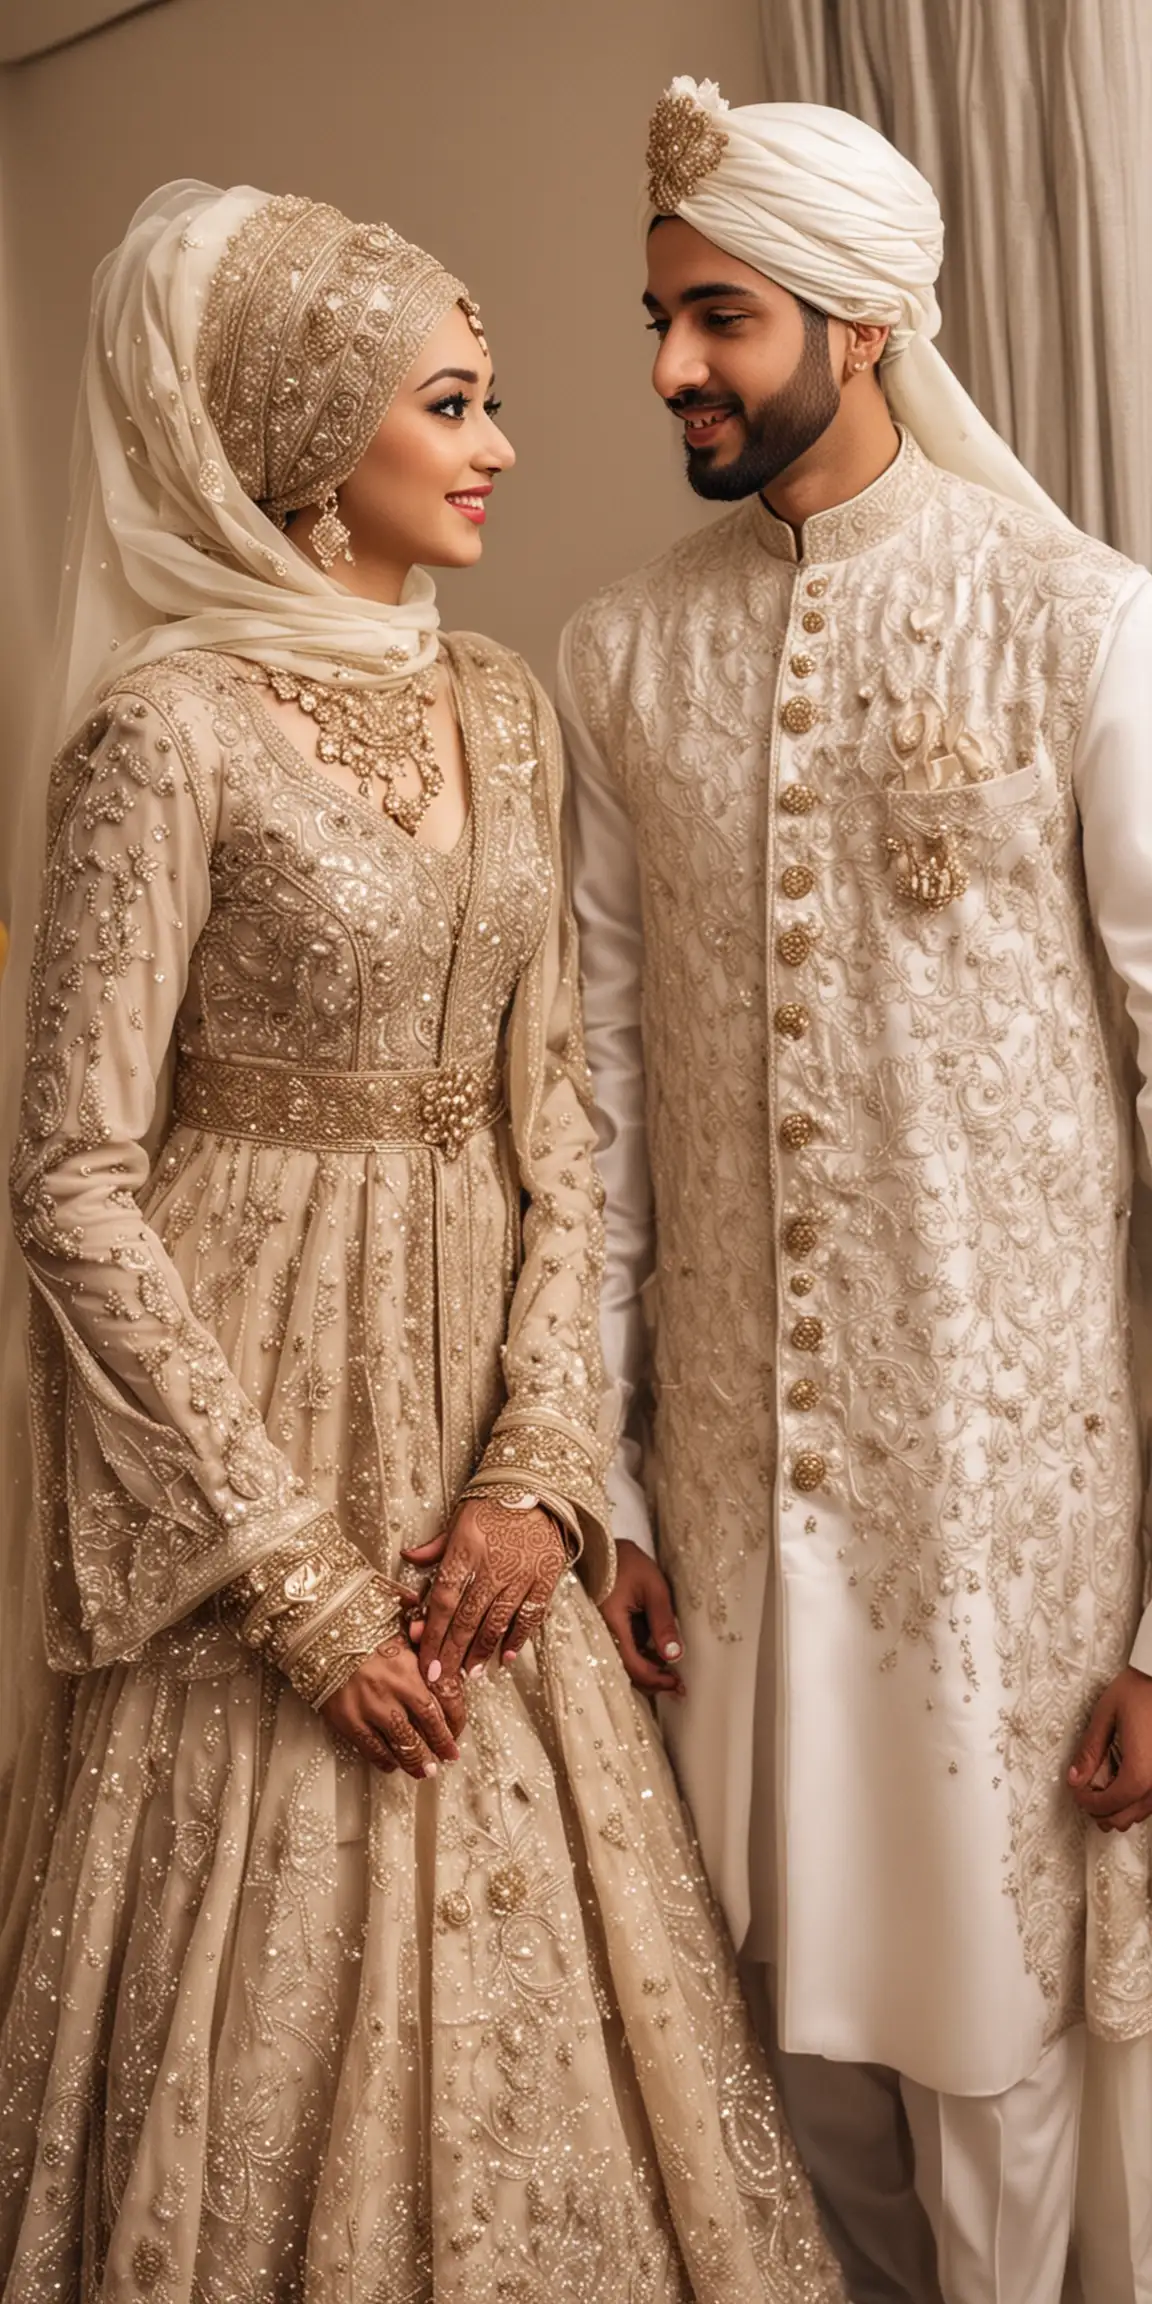 Hijabi Bride and Groom Wedding Attire